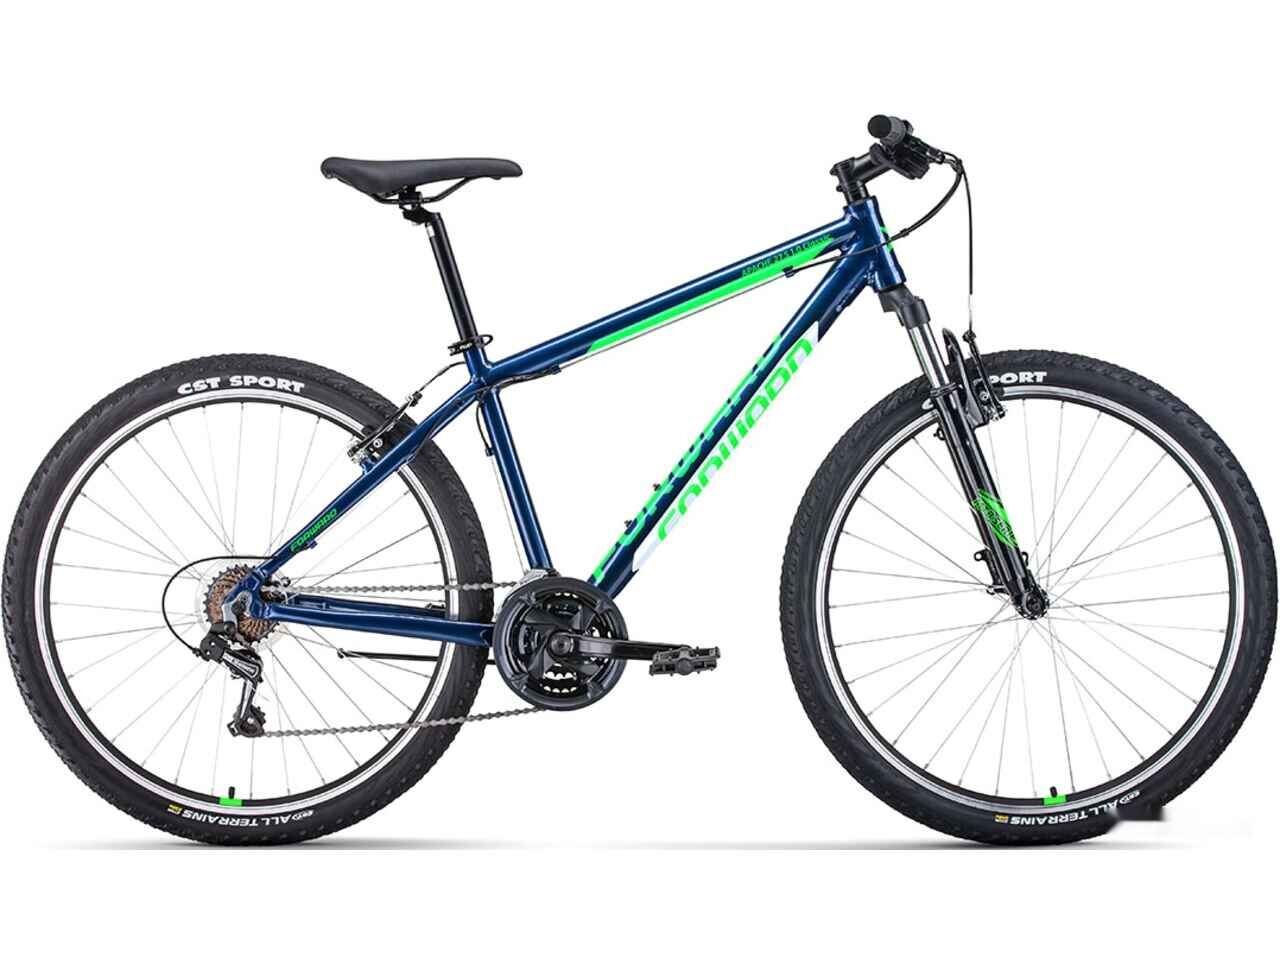 Велосипед Forward Apache 27.5 1.0 Classic р.19 2022 (синий/зеленый)